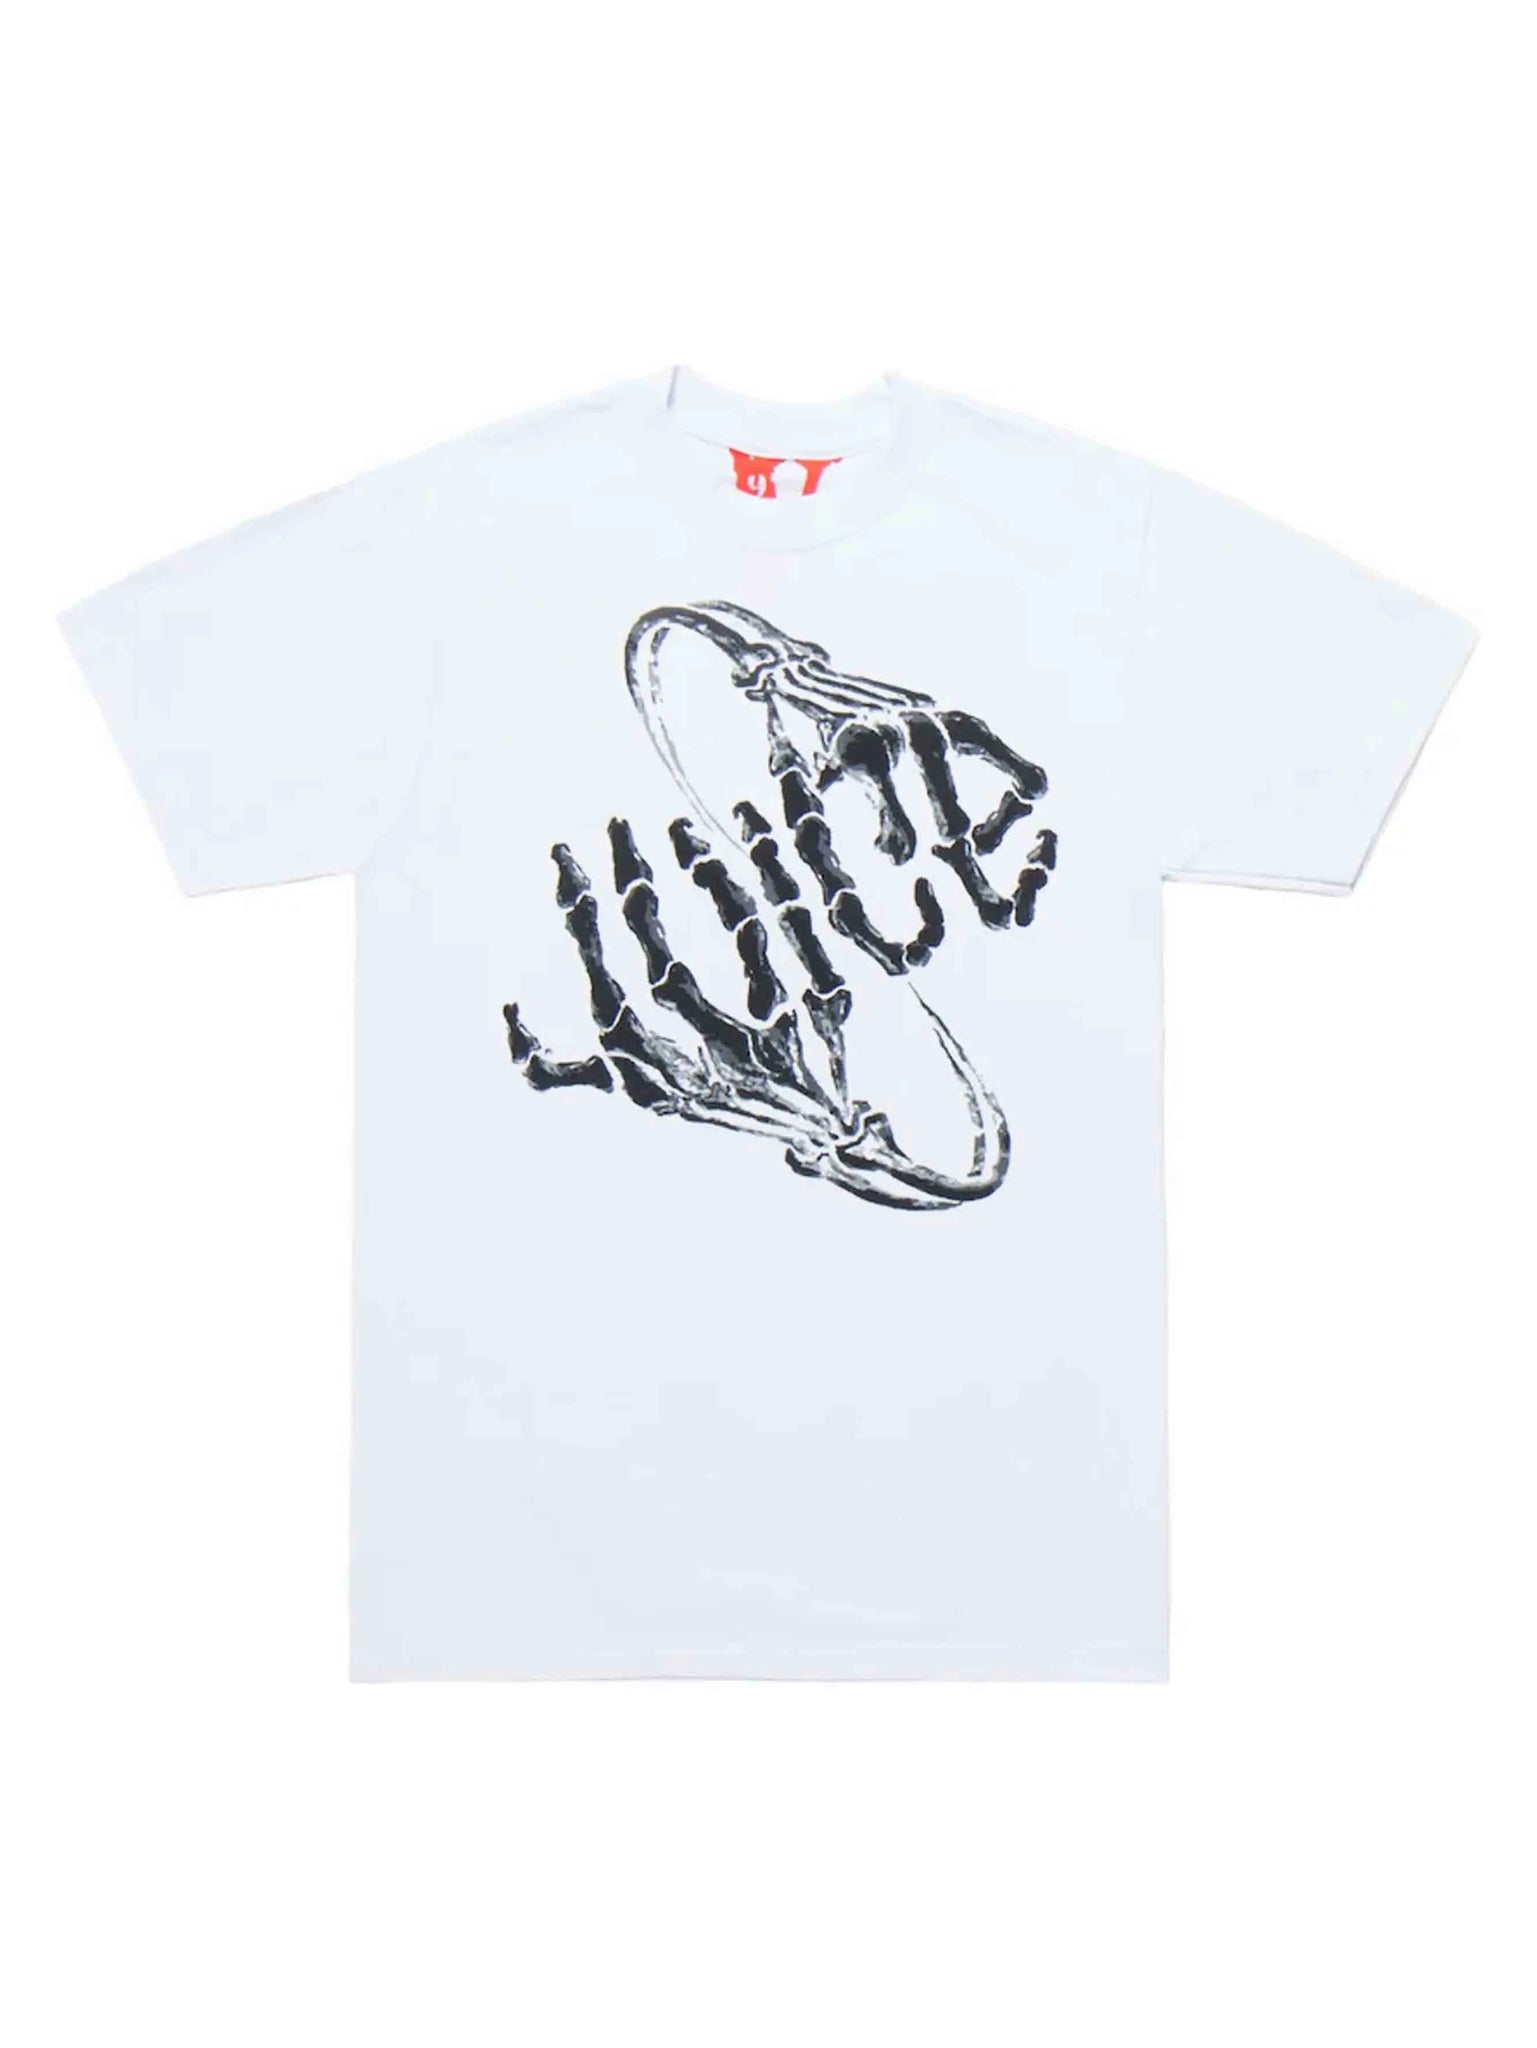 Juice Wrld x Vlone Bones T-shirt White (SS22) Prior